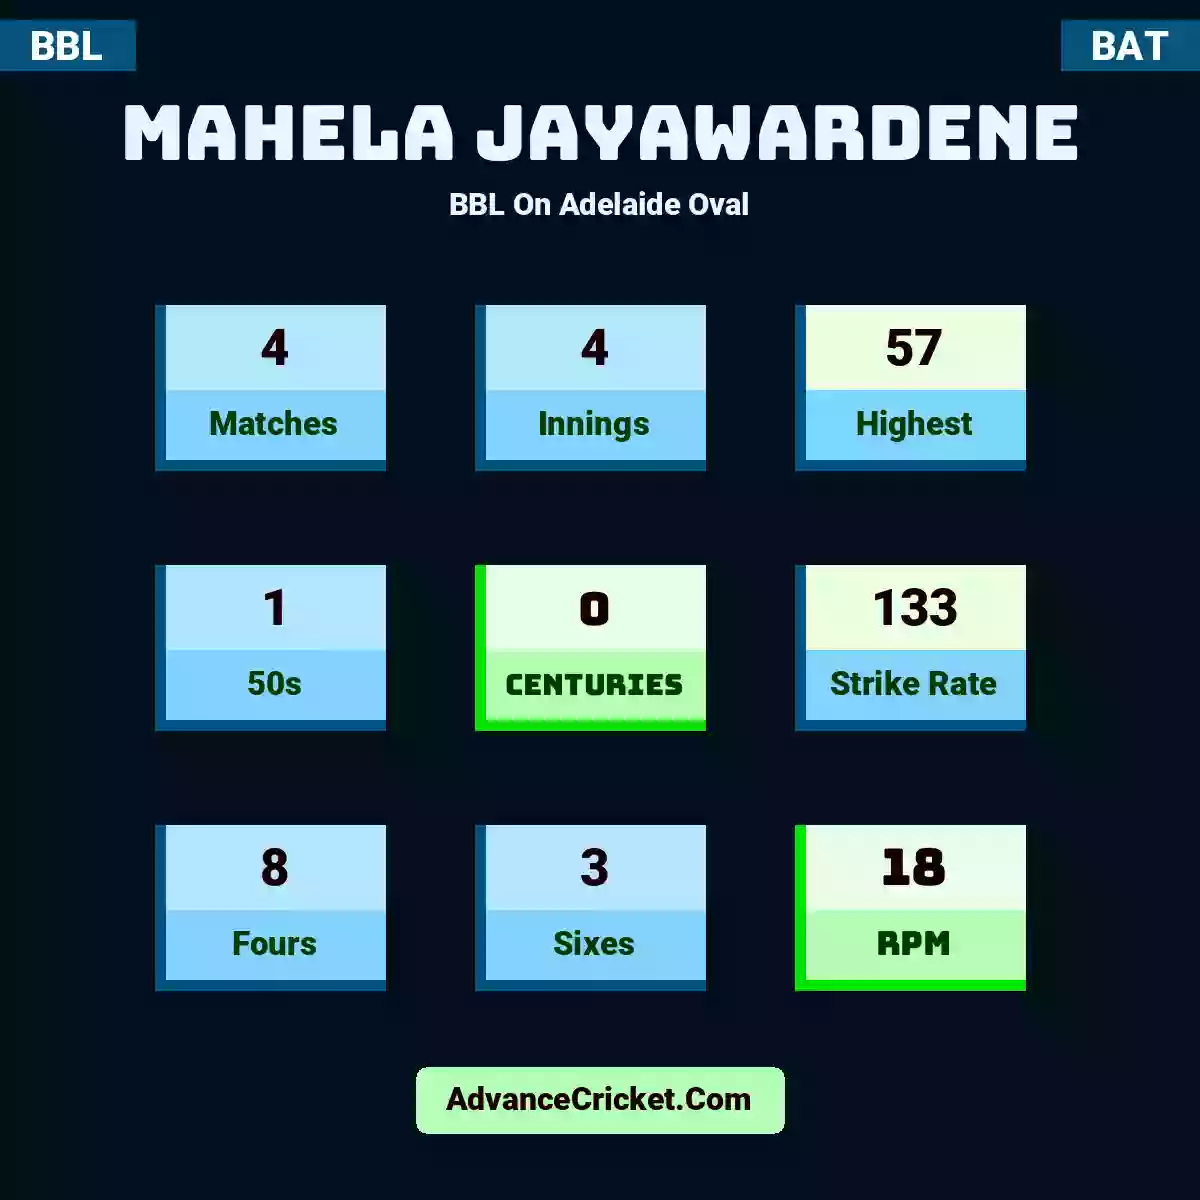 Mahela Jayawardene BBL  On Adelaide Oval, Mahela Jayawardene played 4 matches, scored 57 runs as highest, 1 half-centuries, and 0 centuries, with a strike rate of 133. M.Jayawardene hit 8 fours and 3 sixes, with an RPM of 18.